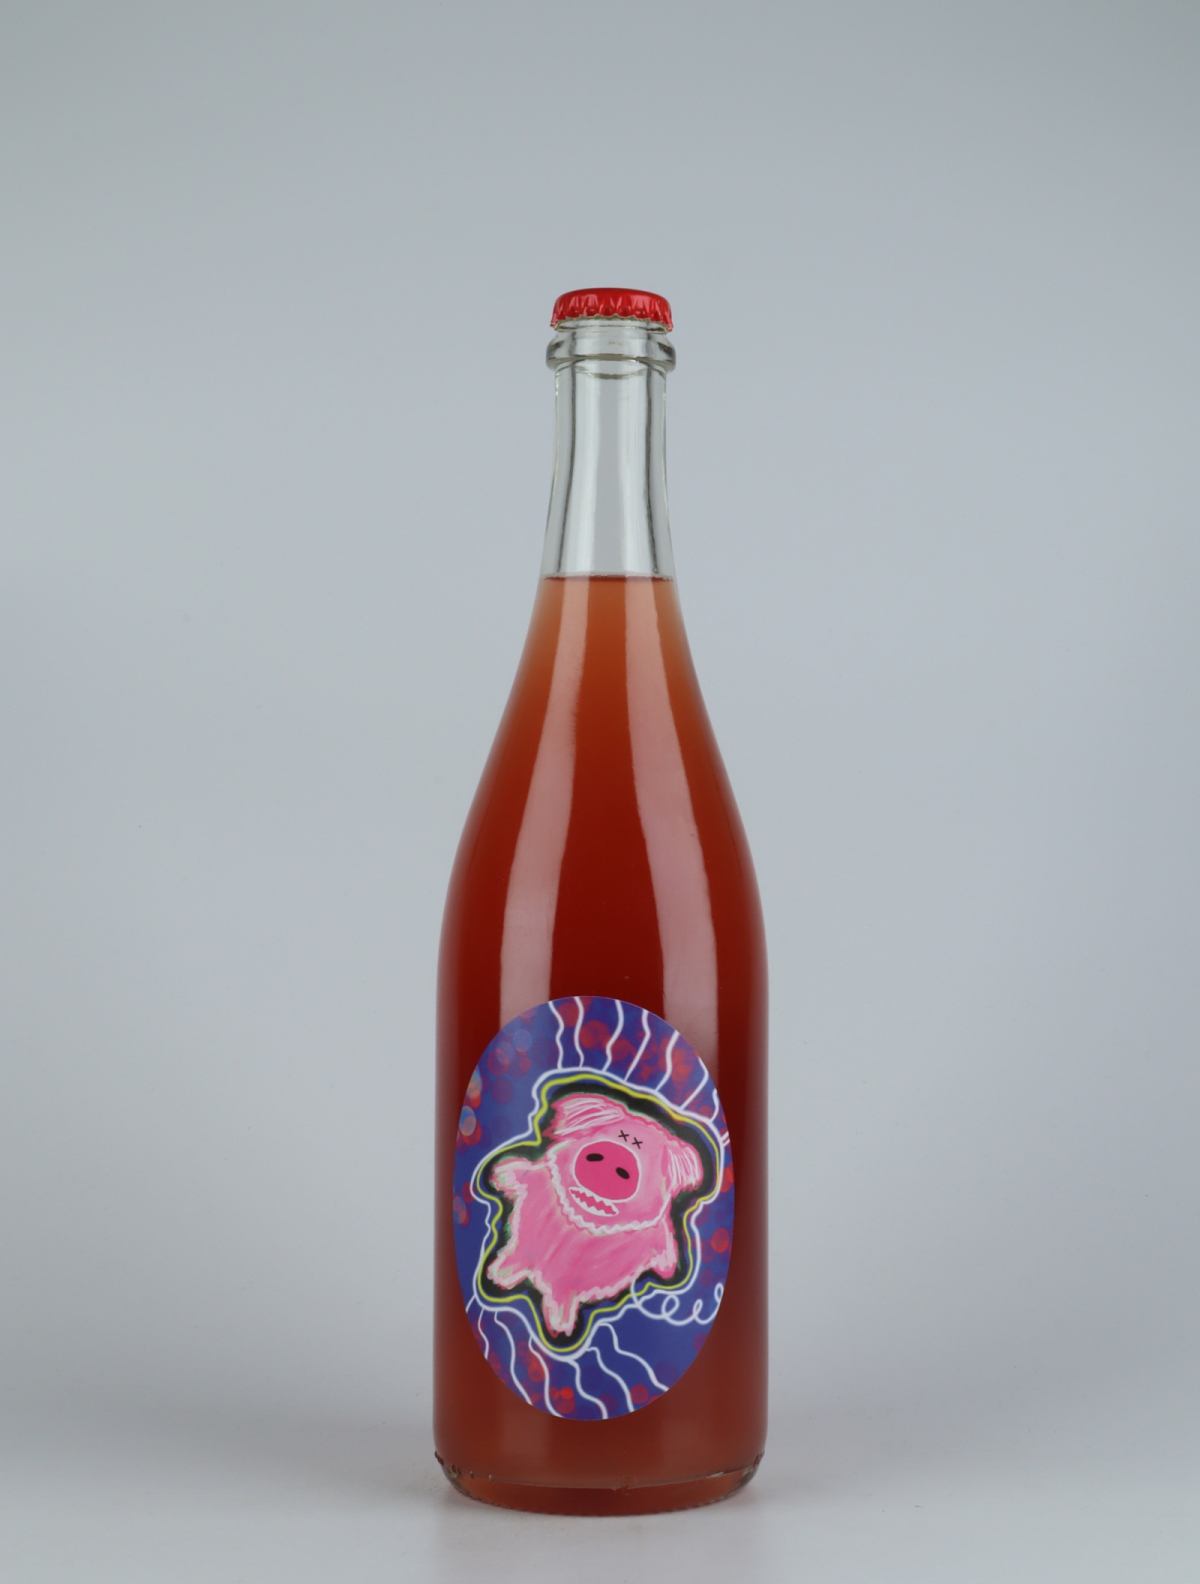 A bottle 2020 Piggy Pop Sparkling from Wildman, Adelaide Hills in Australia